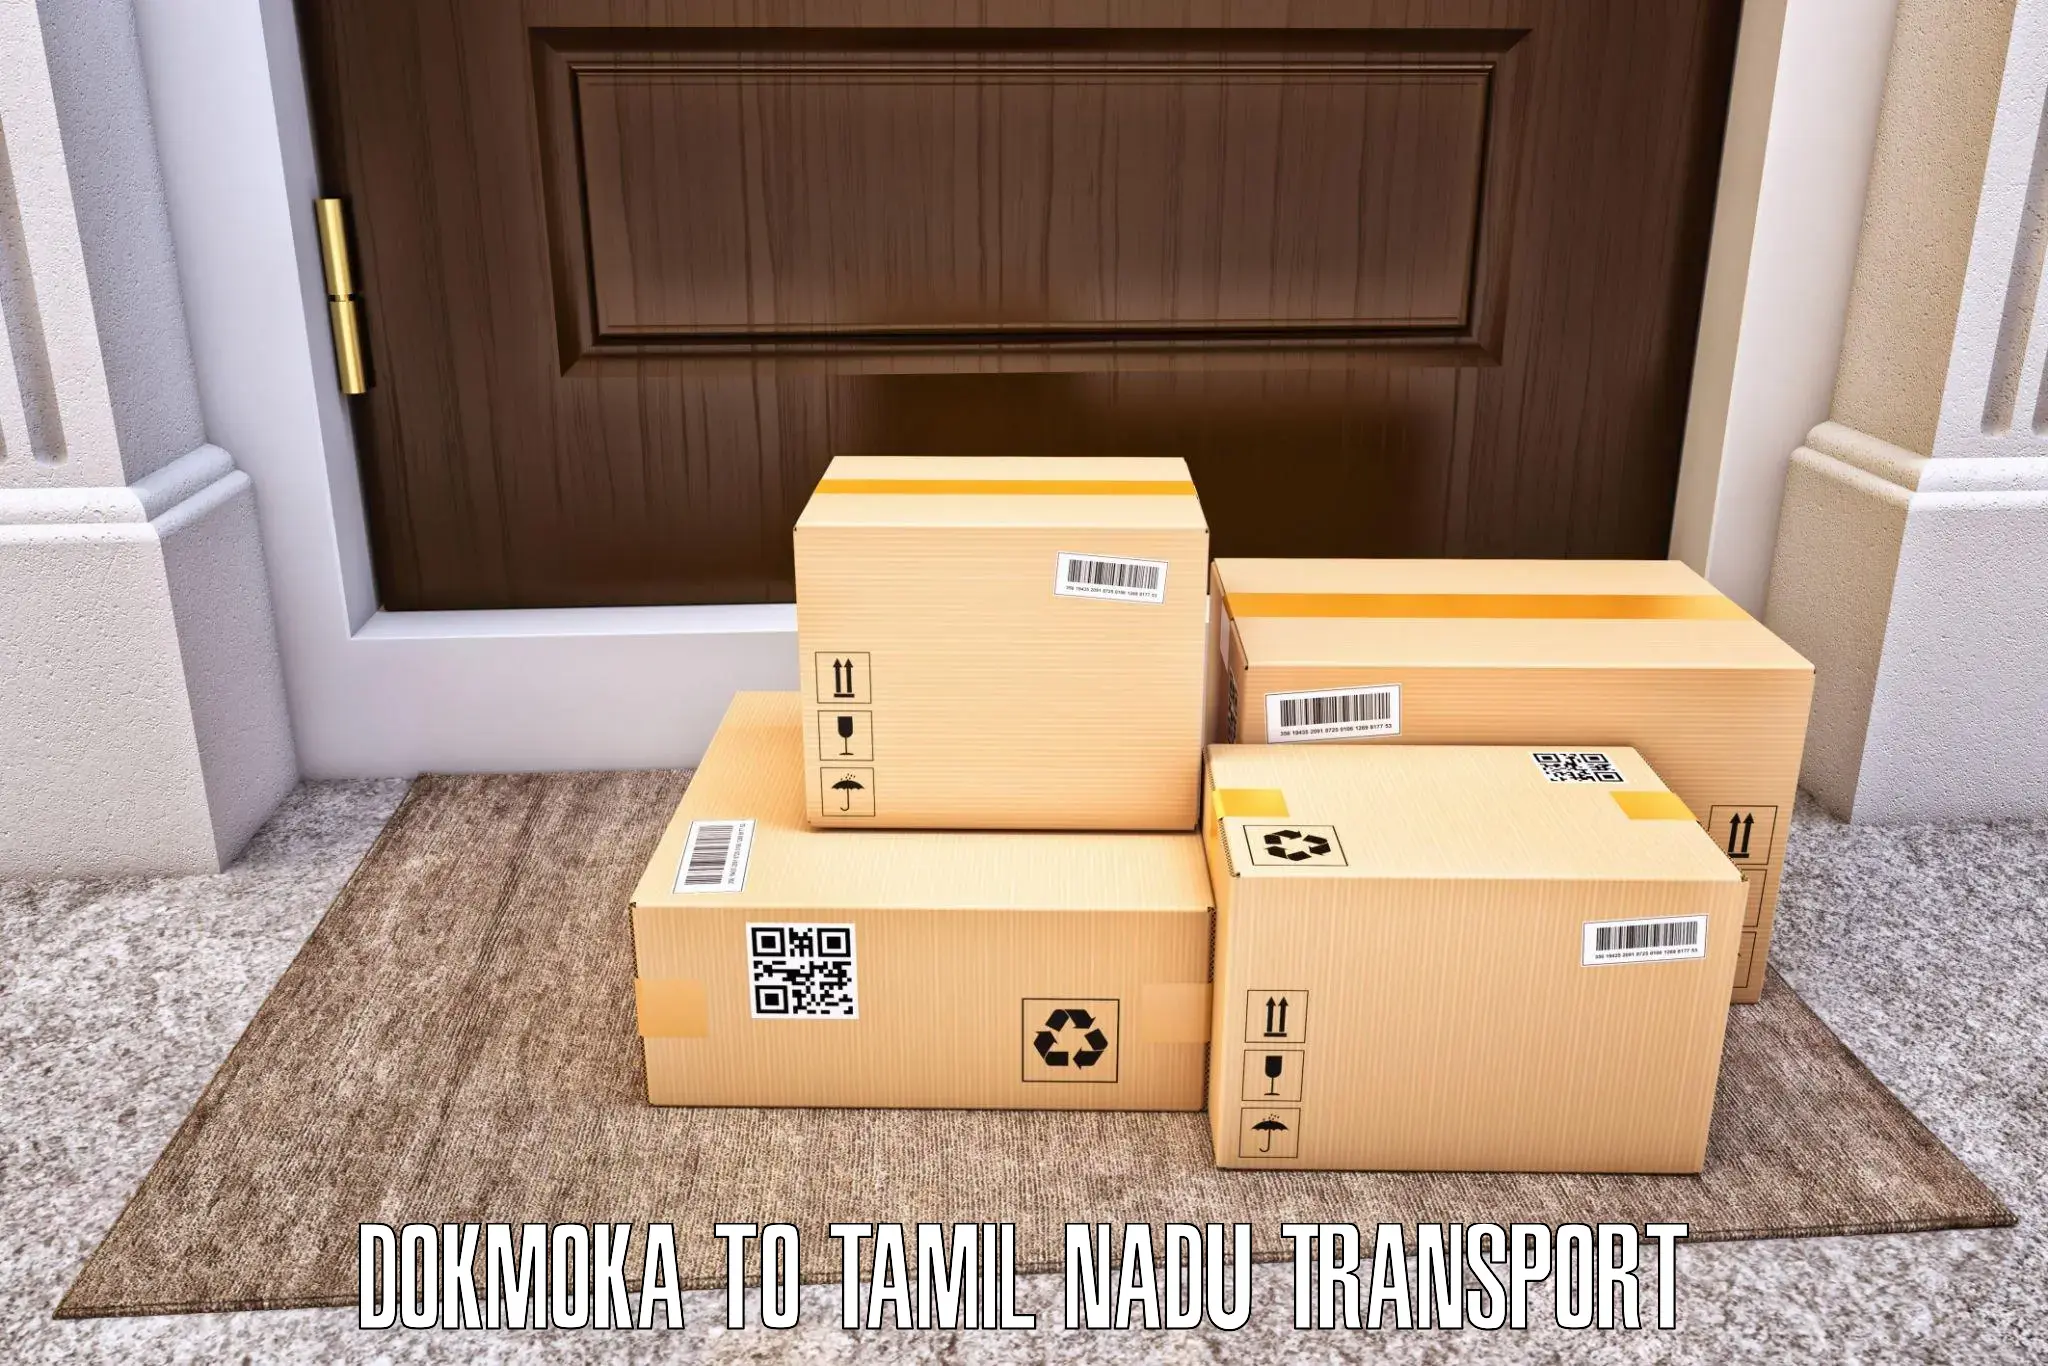 Container transportation services Dokmoka to Sankarapuram